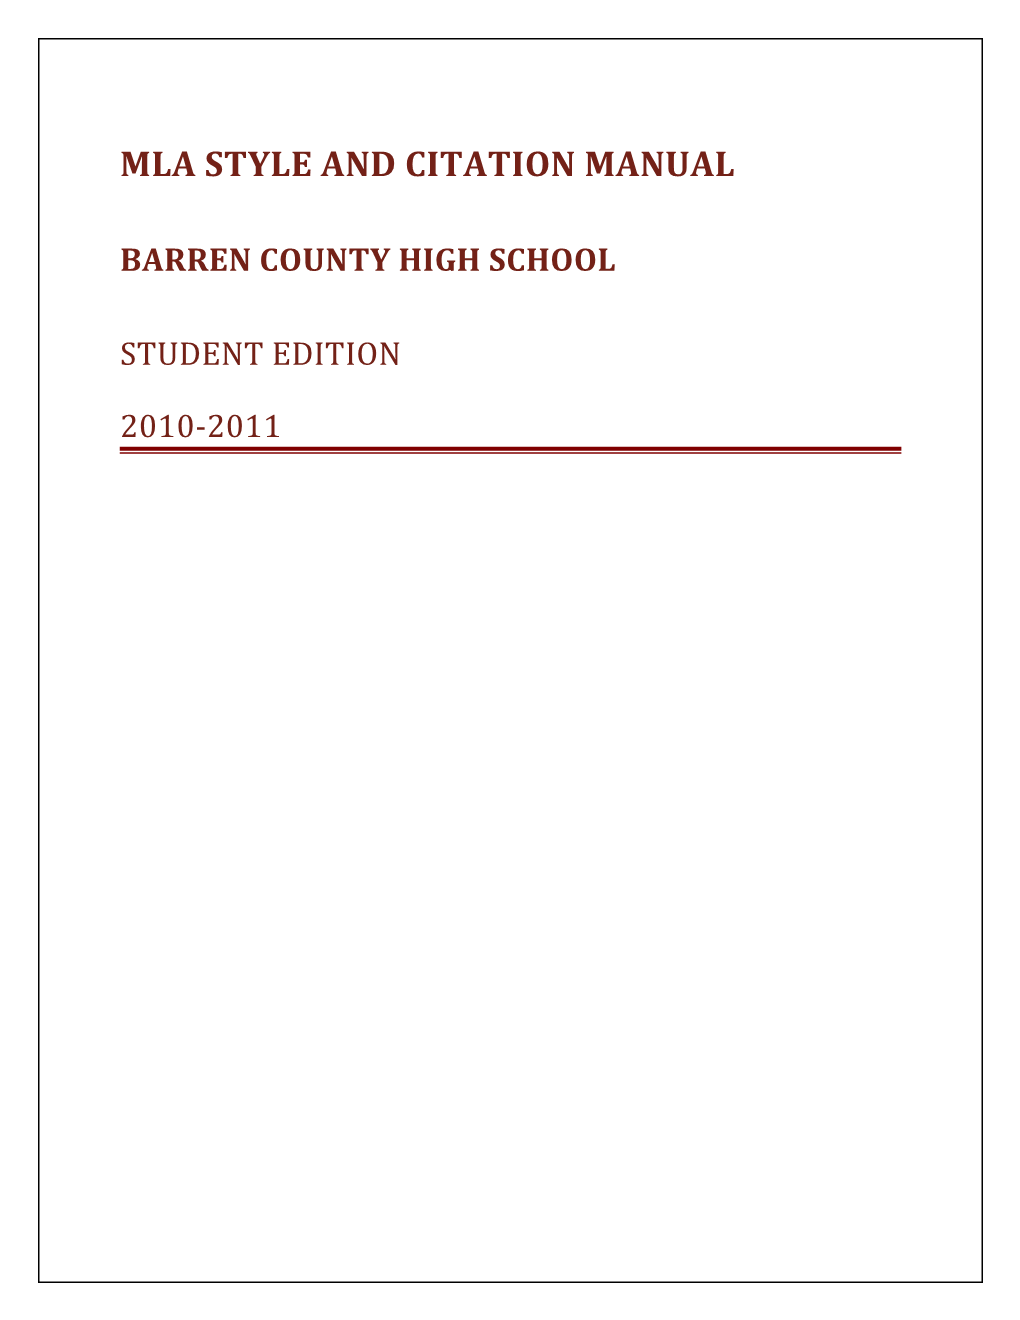 Mla Style and Citation Manual